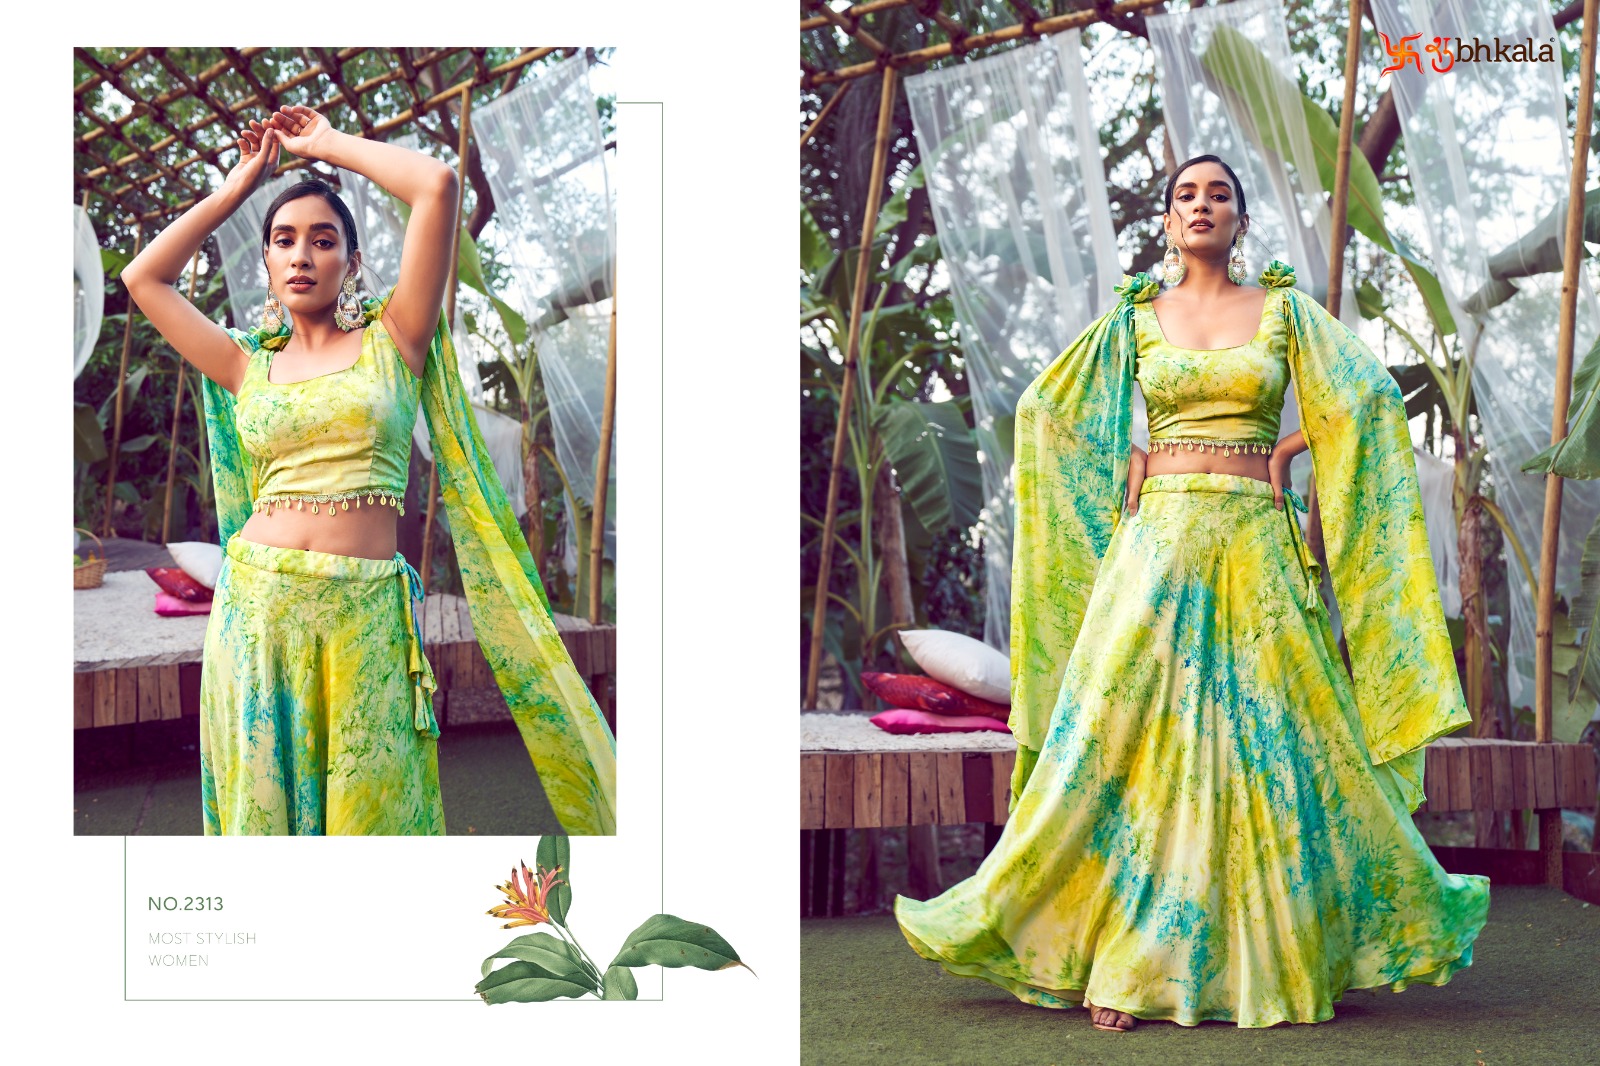 shubhkala girly vol 27 silk innovative look lehngha catalog